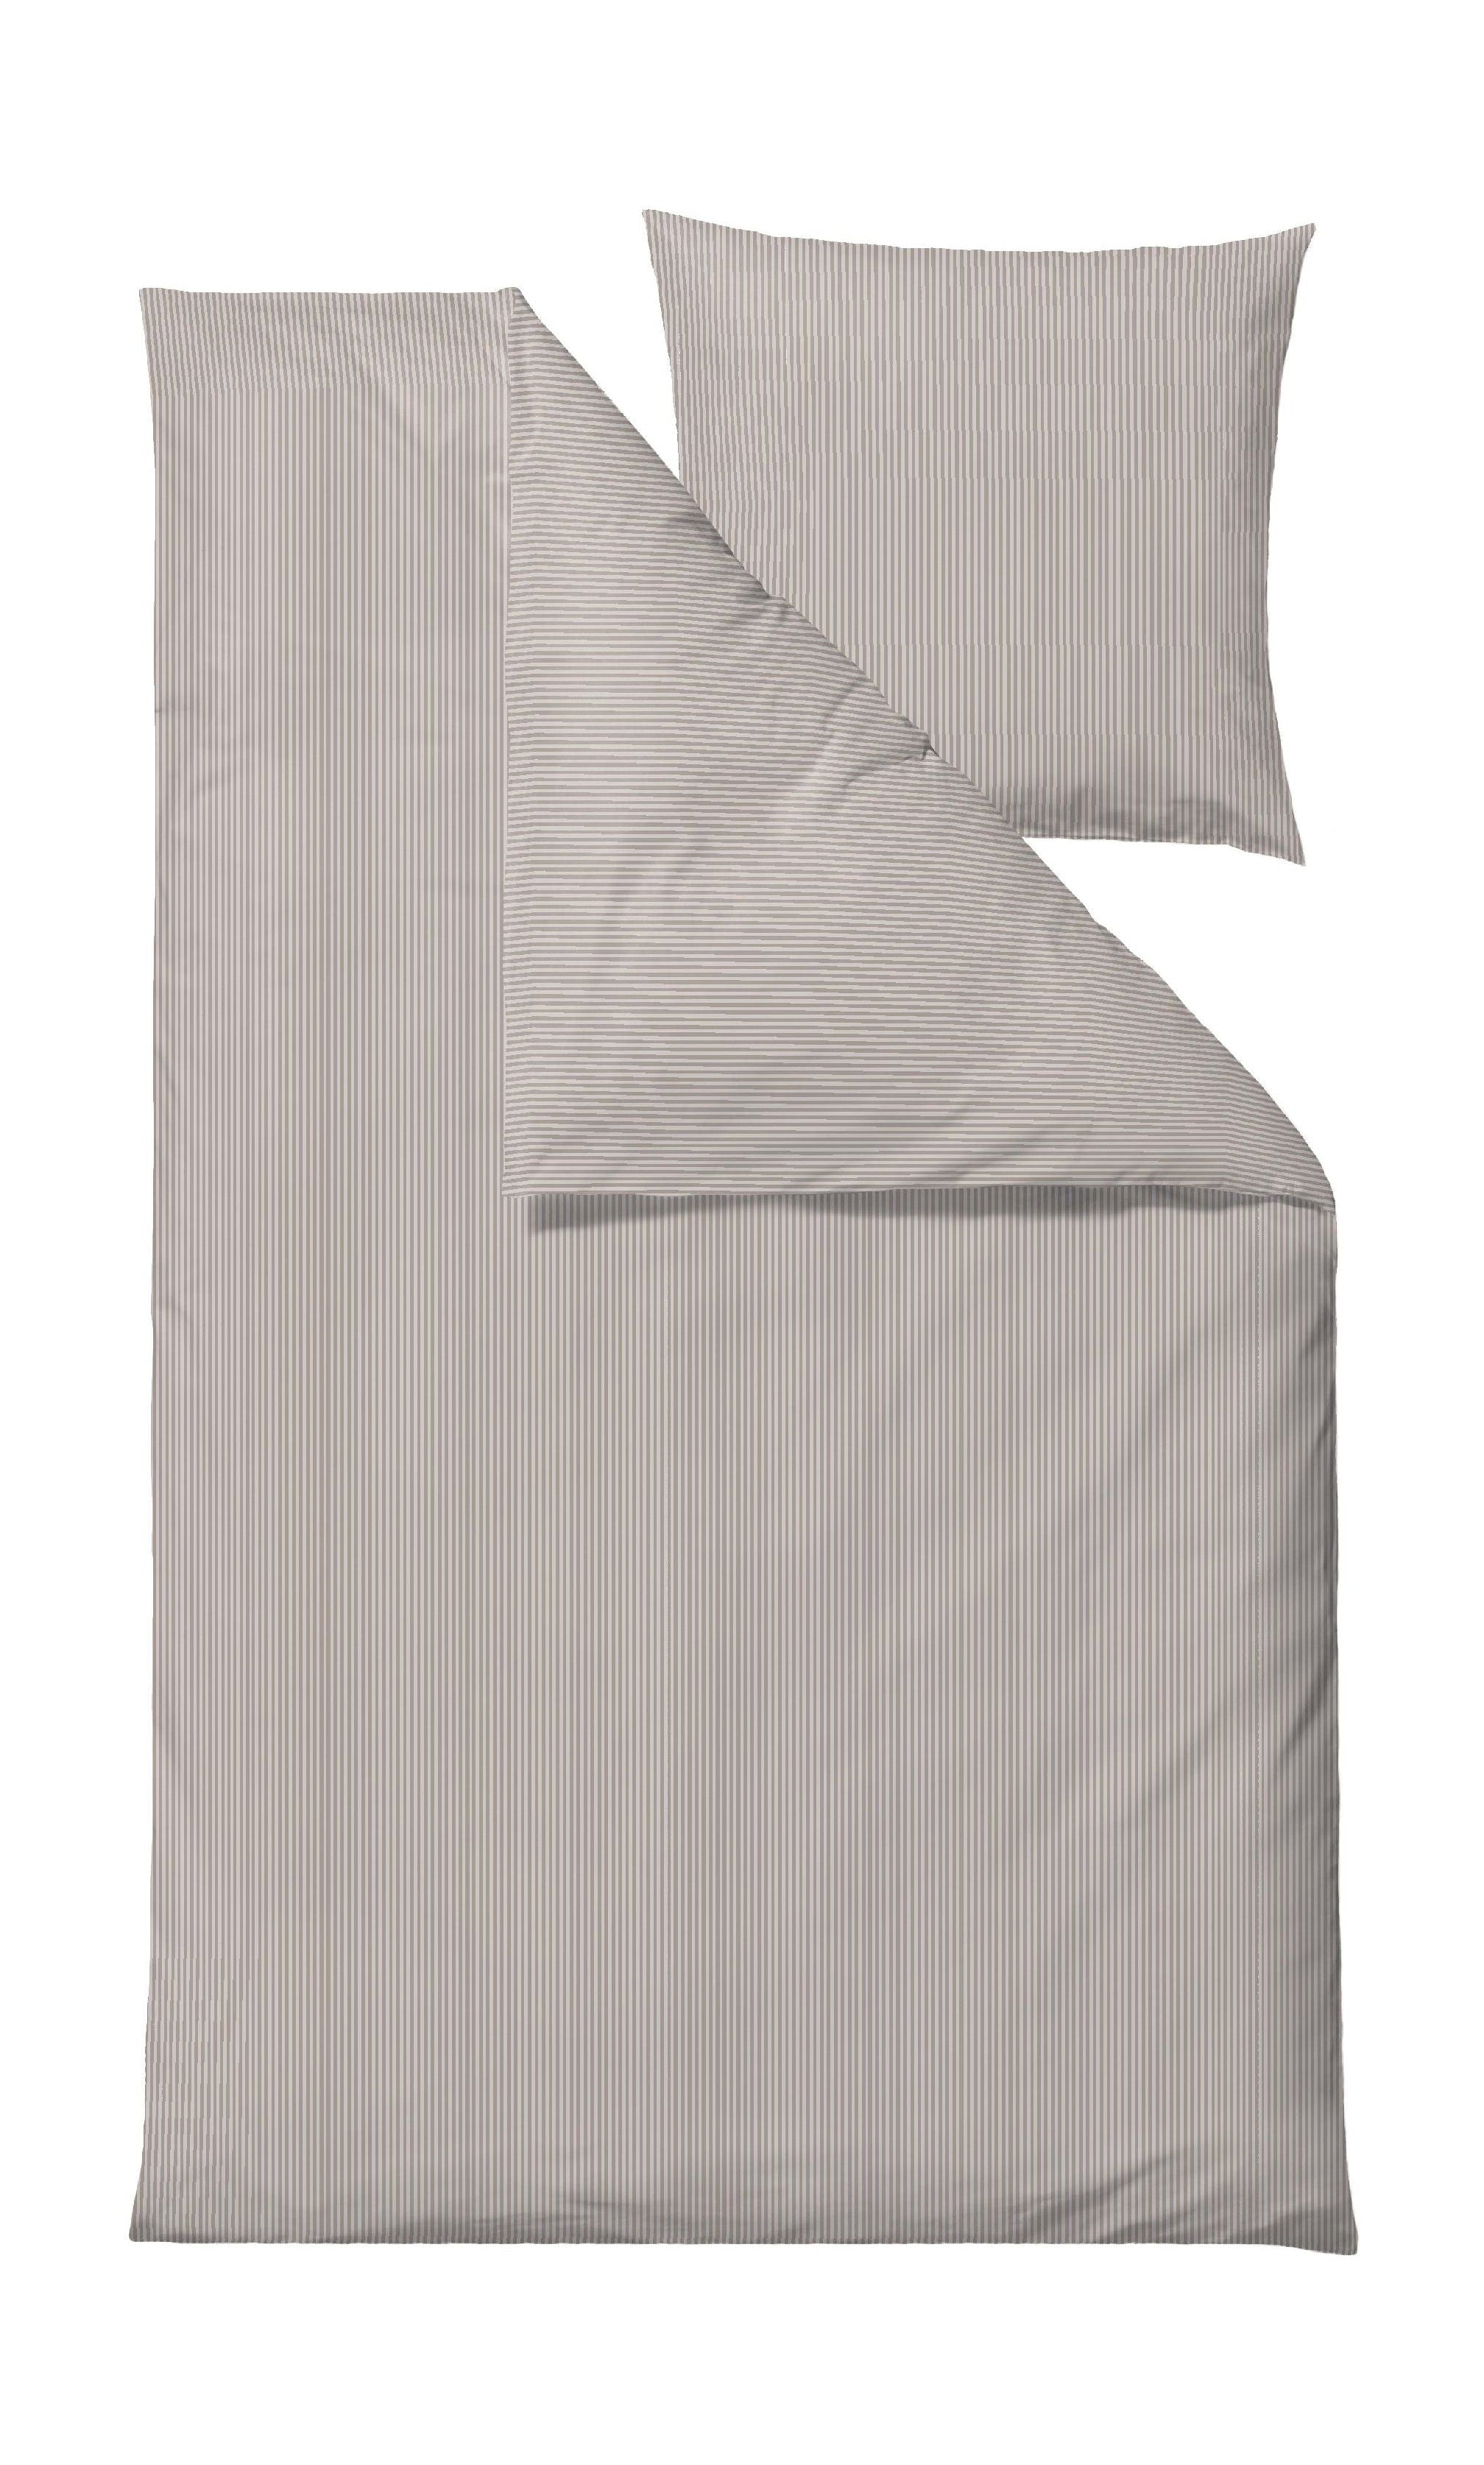 Södahl Classic Stripe Bed Linen 140x220 Cm, Taupe